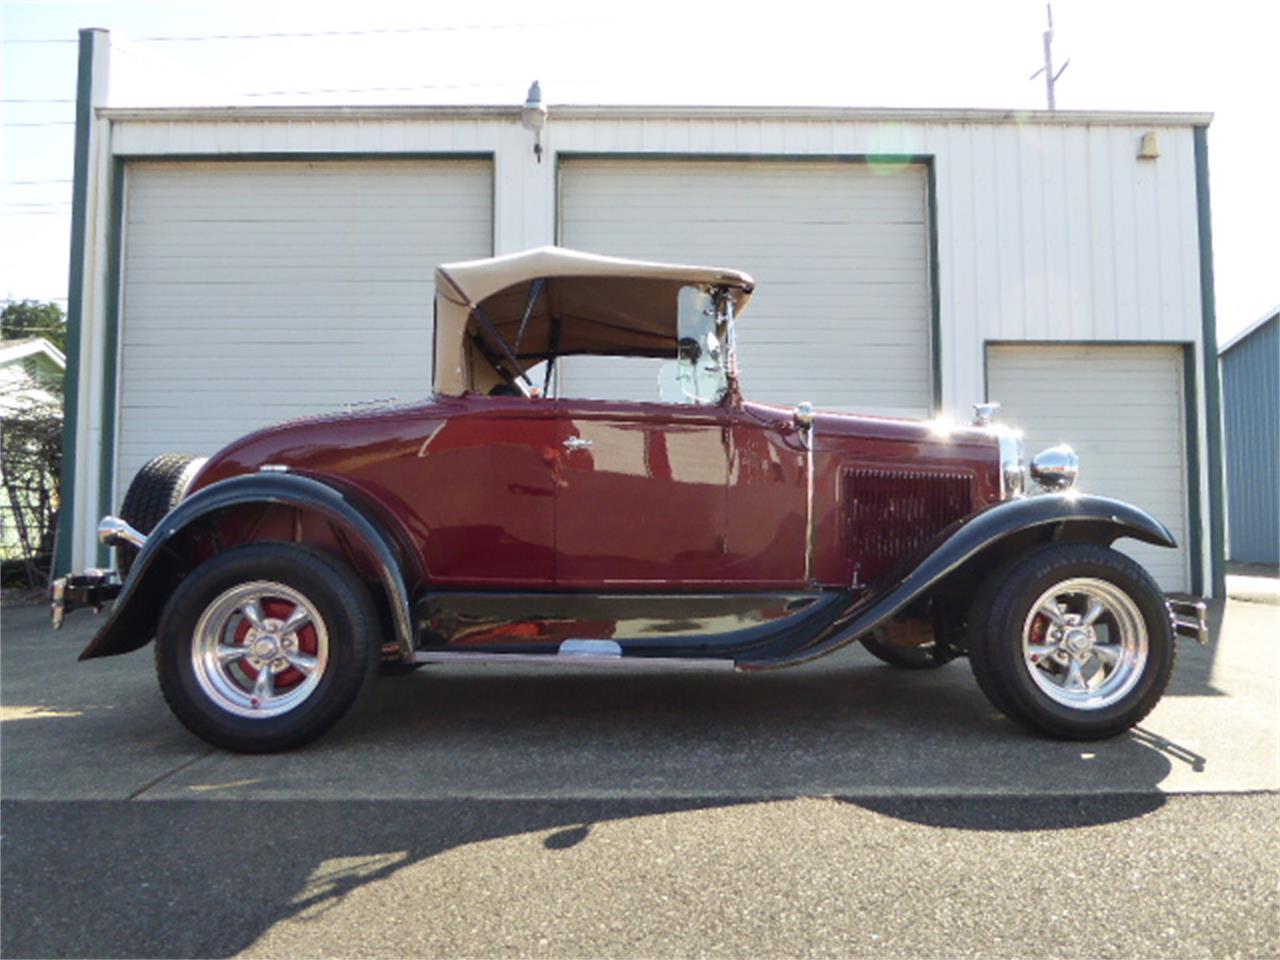 For Sale: 1931 Ford Model A in Turner, Oregon for sale in Turner, OR